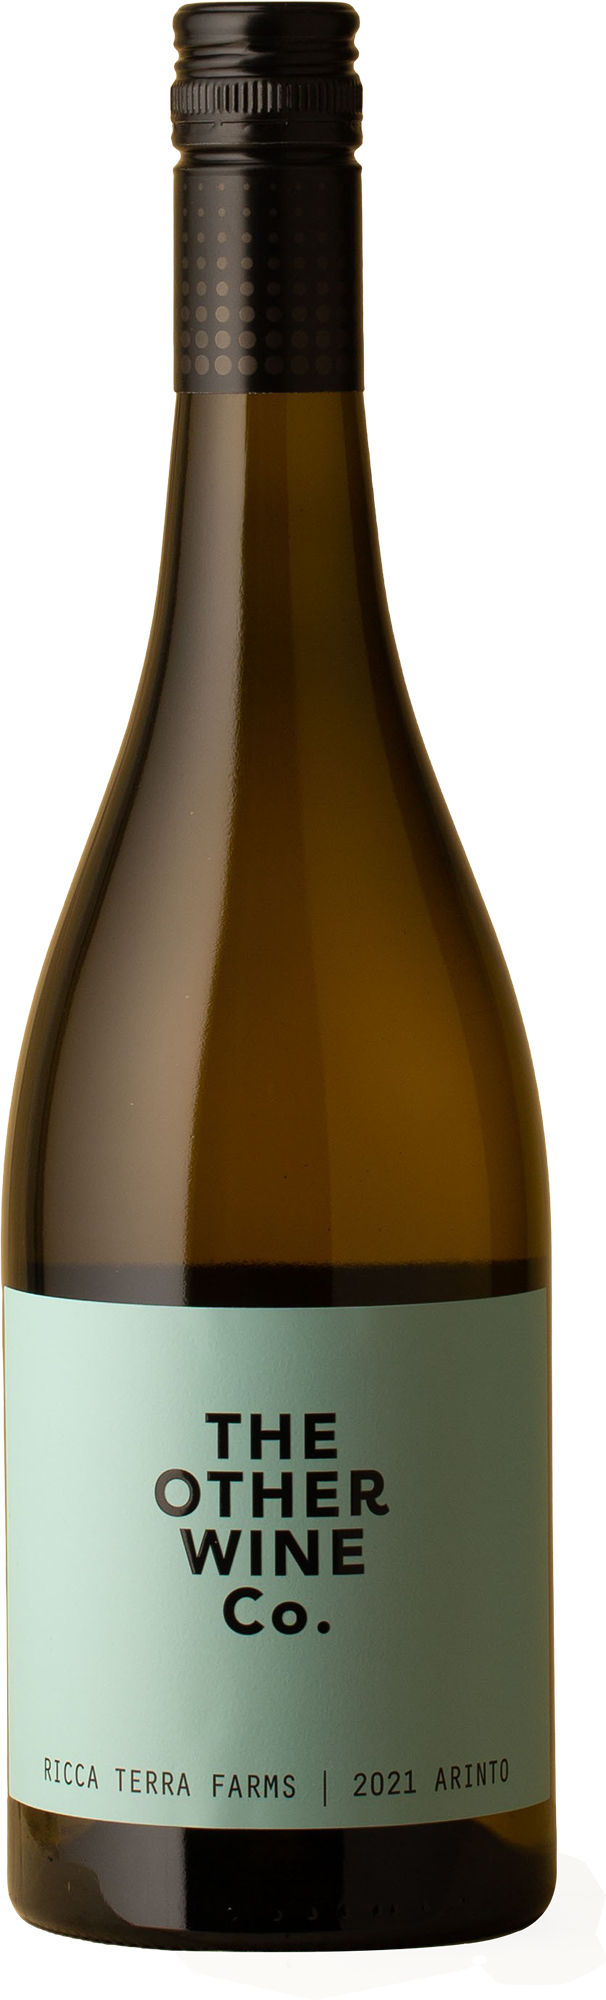 Other Wine Co. - Ricca Terra Farm Arinto 2021 White Wine